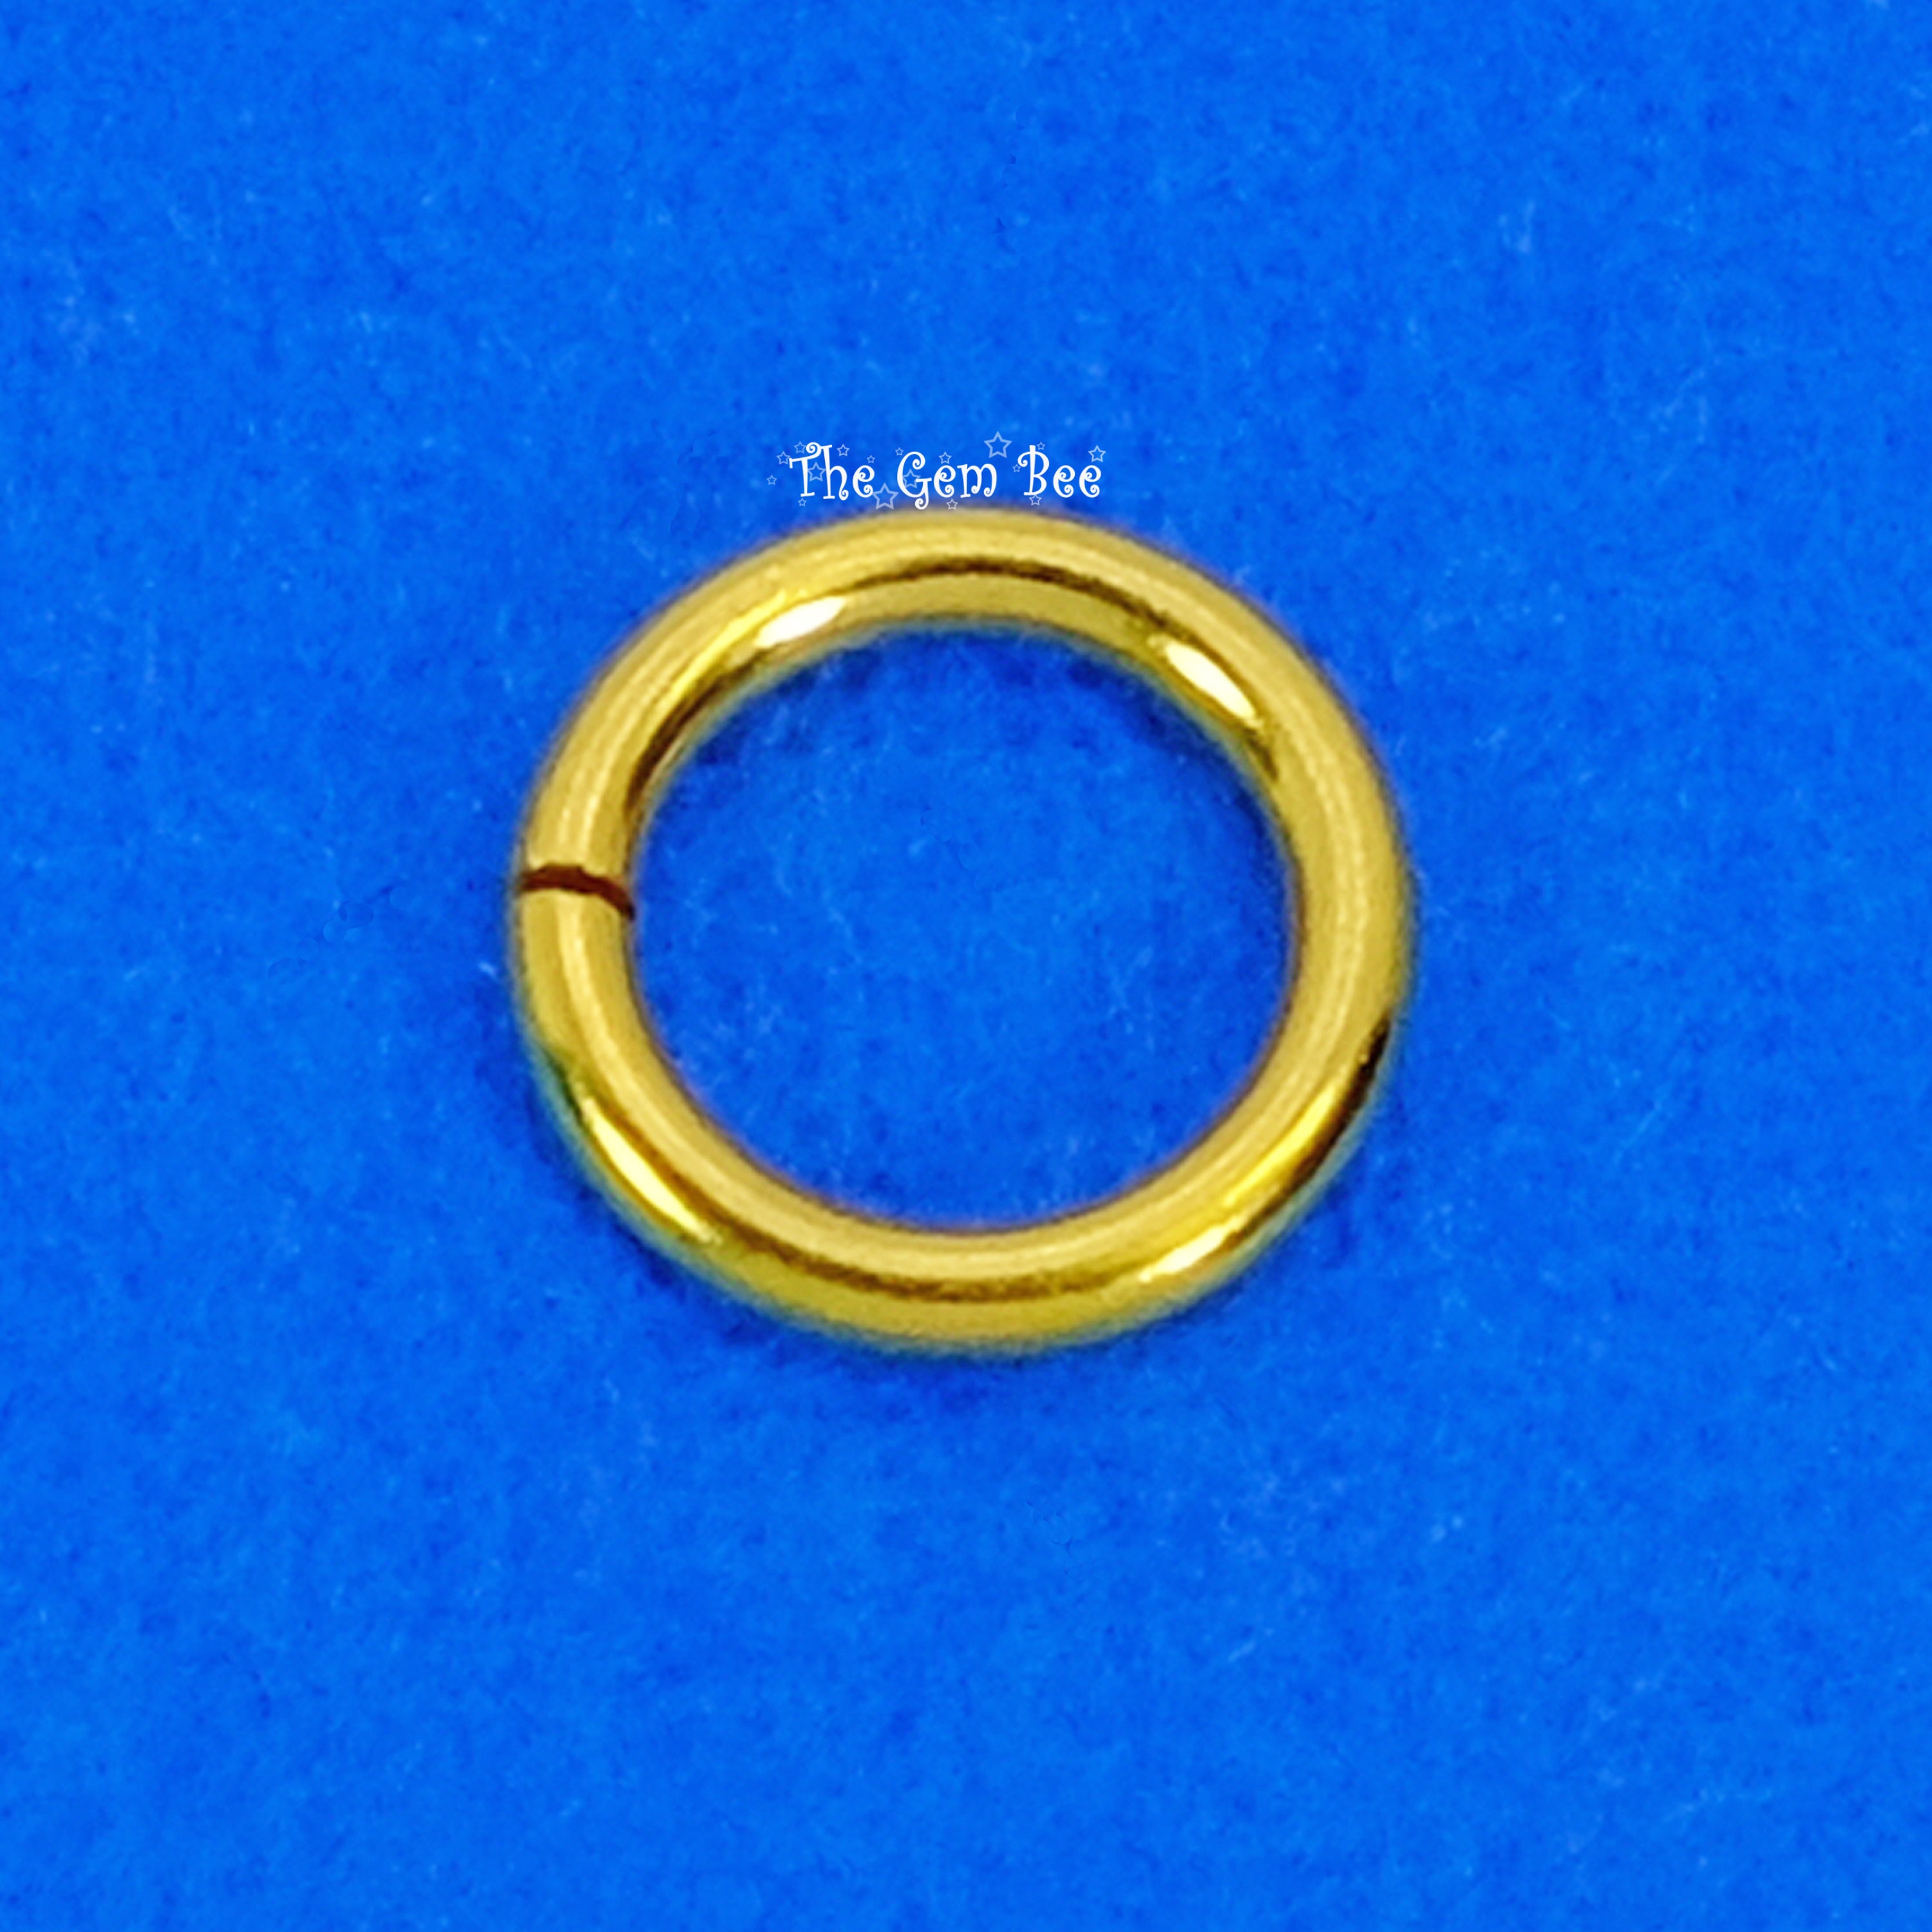 5x7mm Oval Jump Ring 14k Gold Filled Qty 10 - da Bead Shop